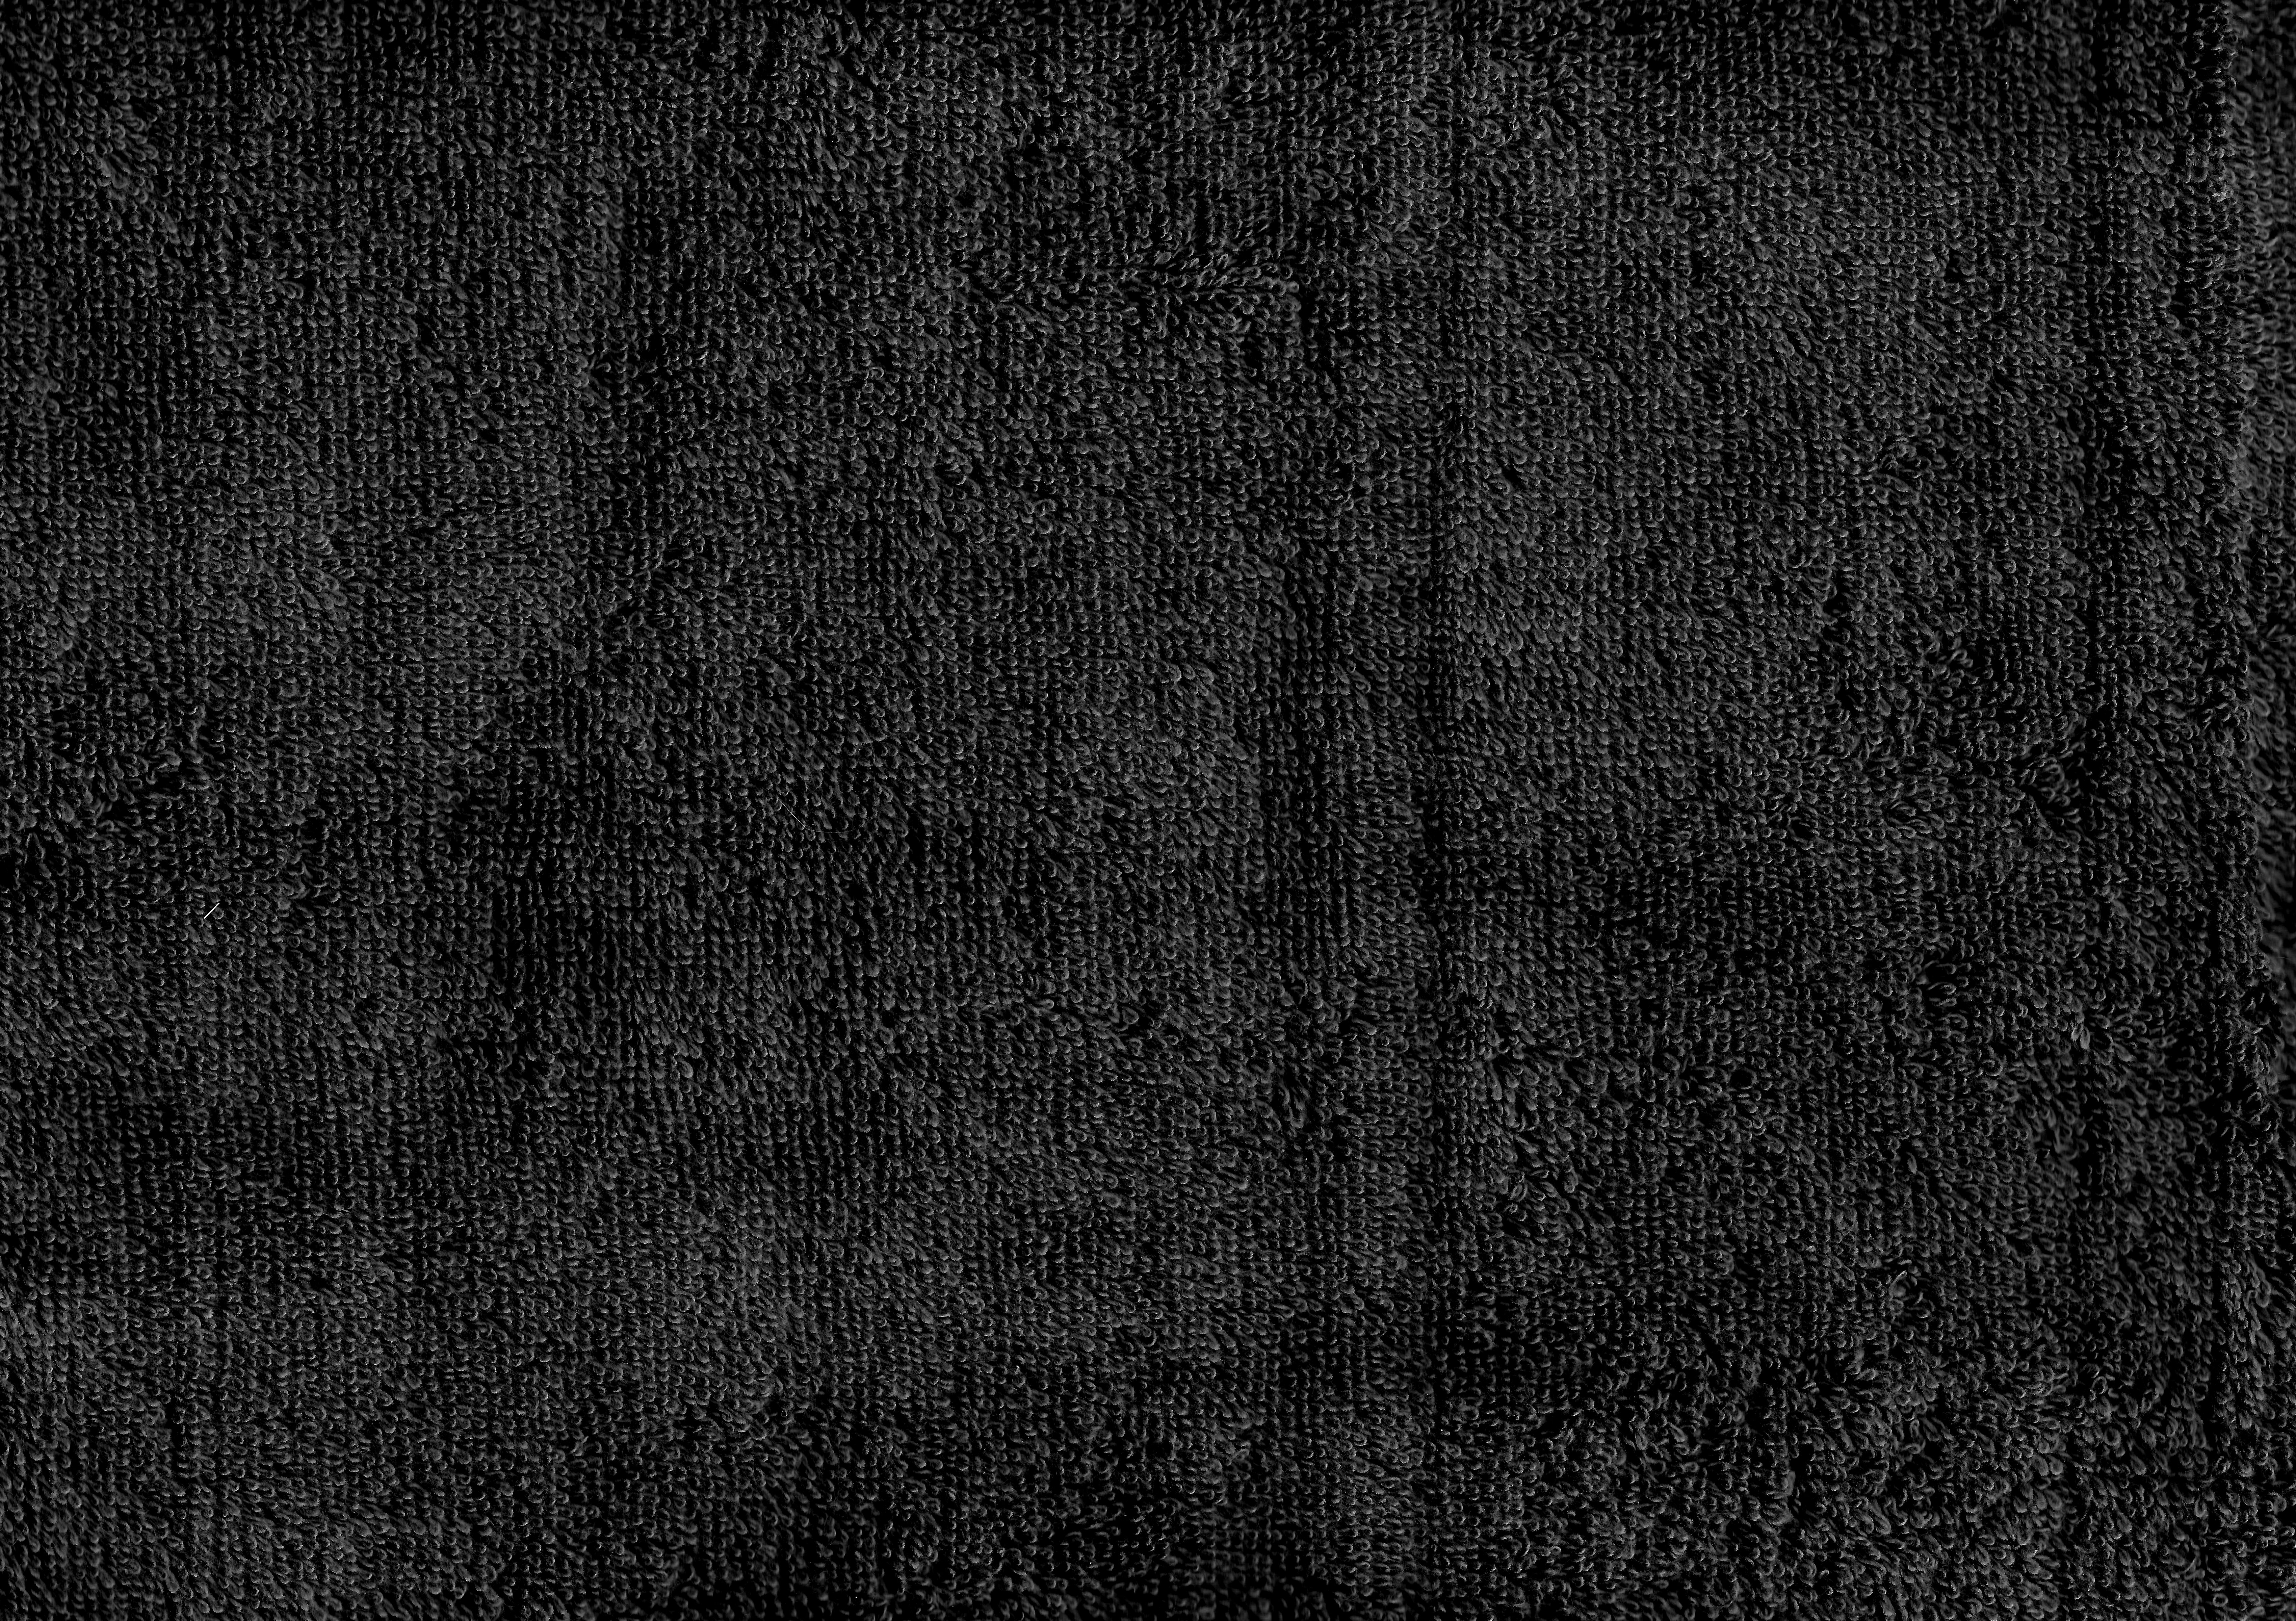 https://www.photos-public-domain.com/wp-content/uploads/2018/02/black-terry-cloth-towel-texture.jpg